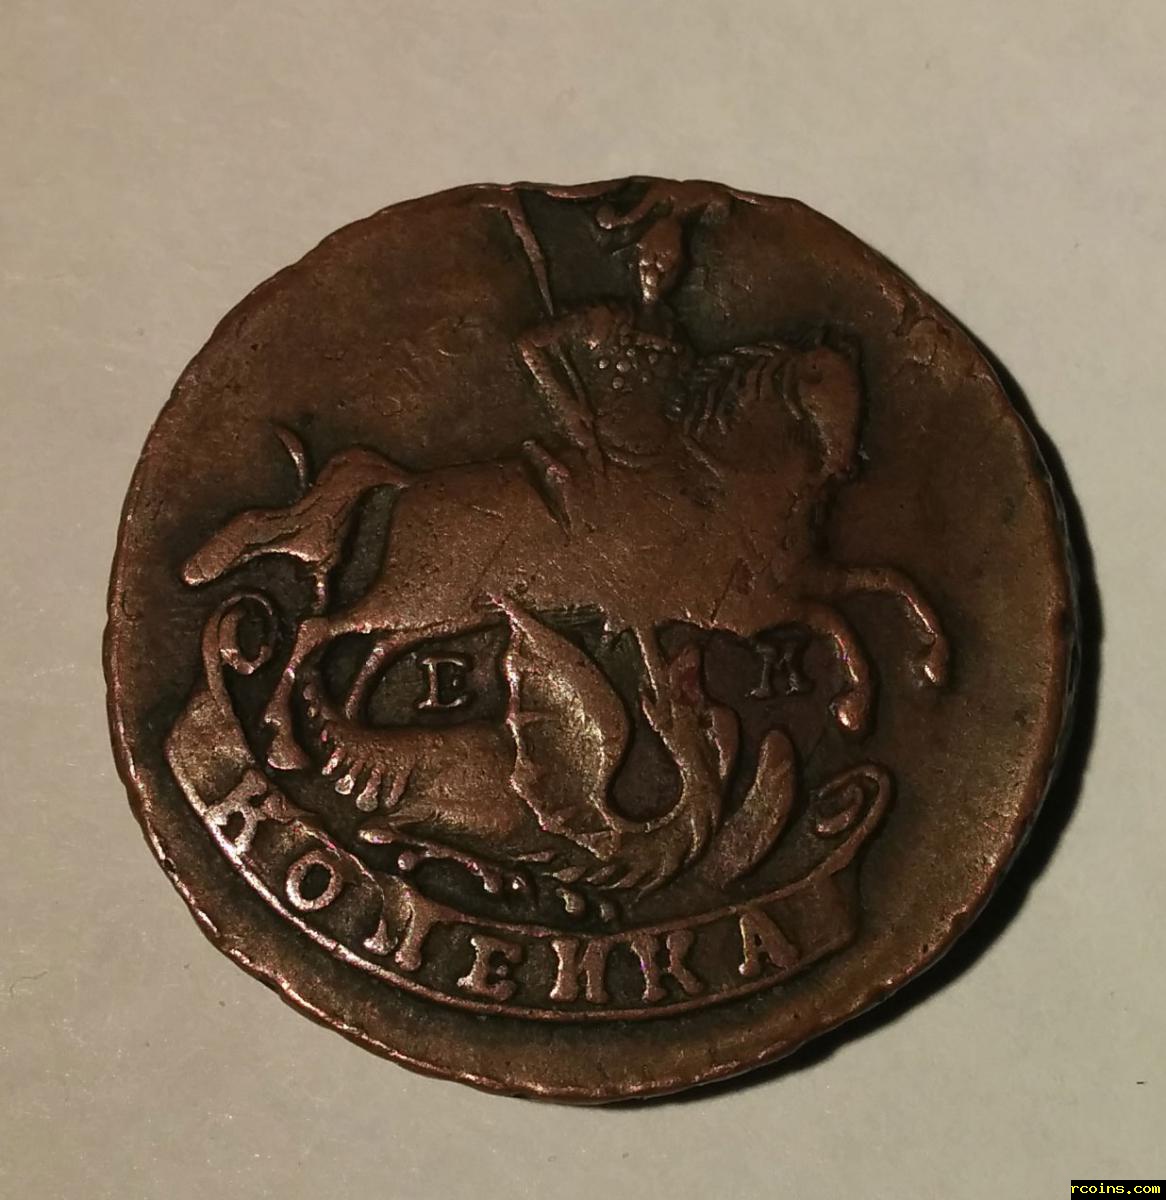 Монеты 1700 цены. Медные монеты 1700-1800 года. Копейка 1790. Медные монеты 1700-1900. Медная монета Sesino di Mantova 1700.